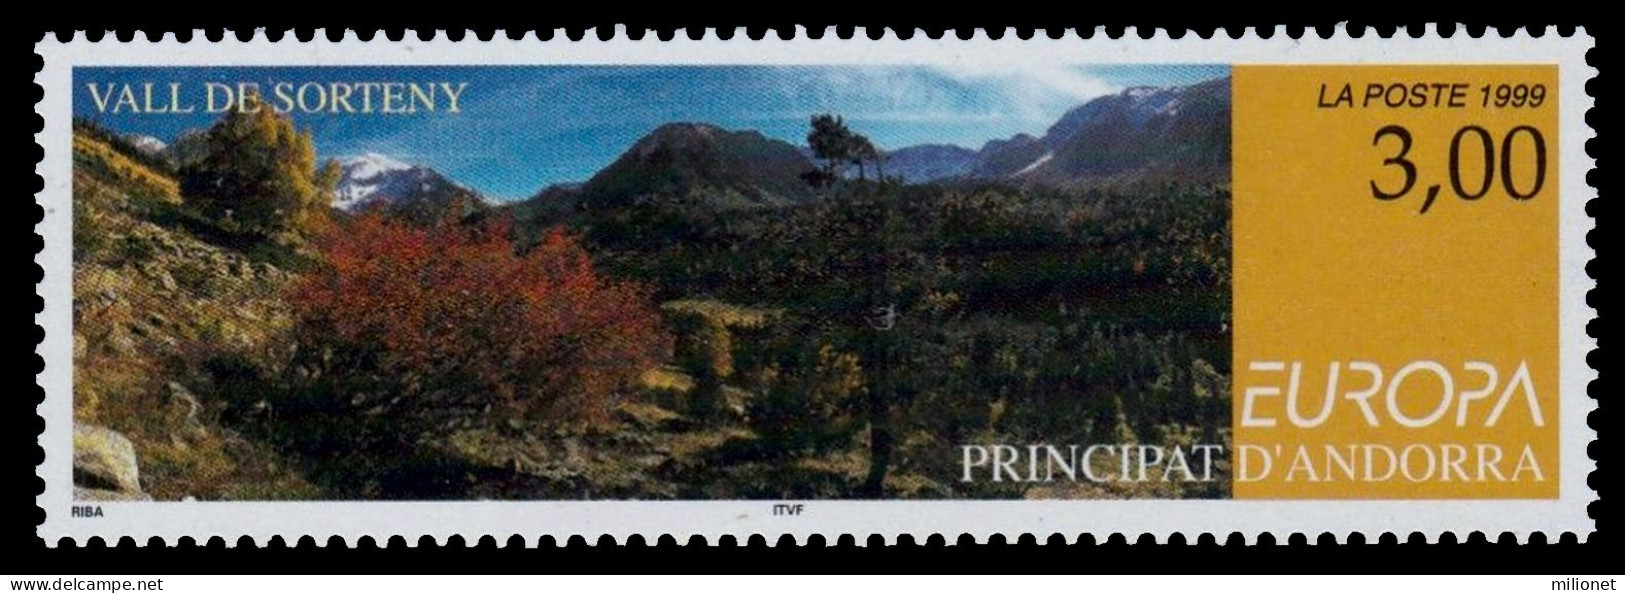 SALE!!! FRENCH ANDORRA ANDORRE 1999 EUROPA CEPT National Reserves & Parks 1 Stamp Set MNH ** - 1999